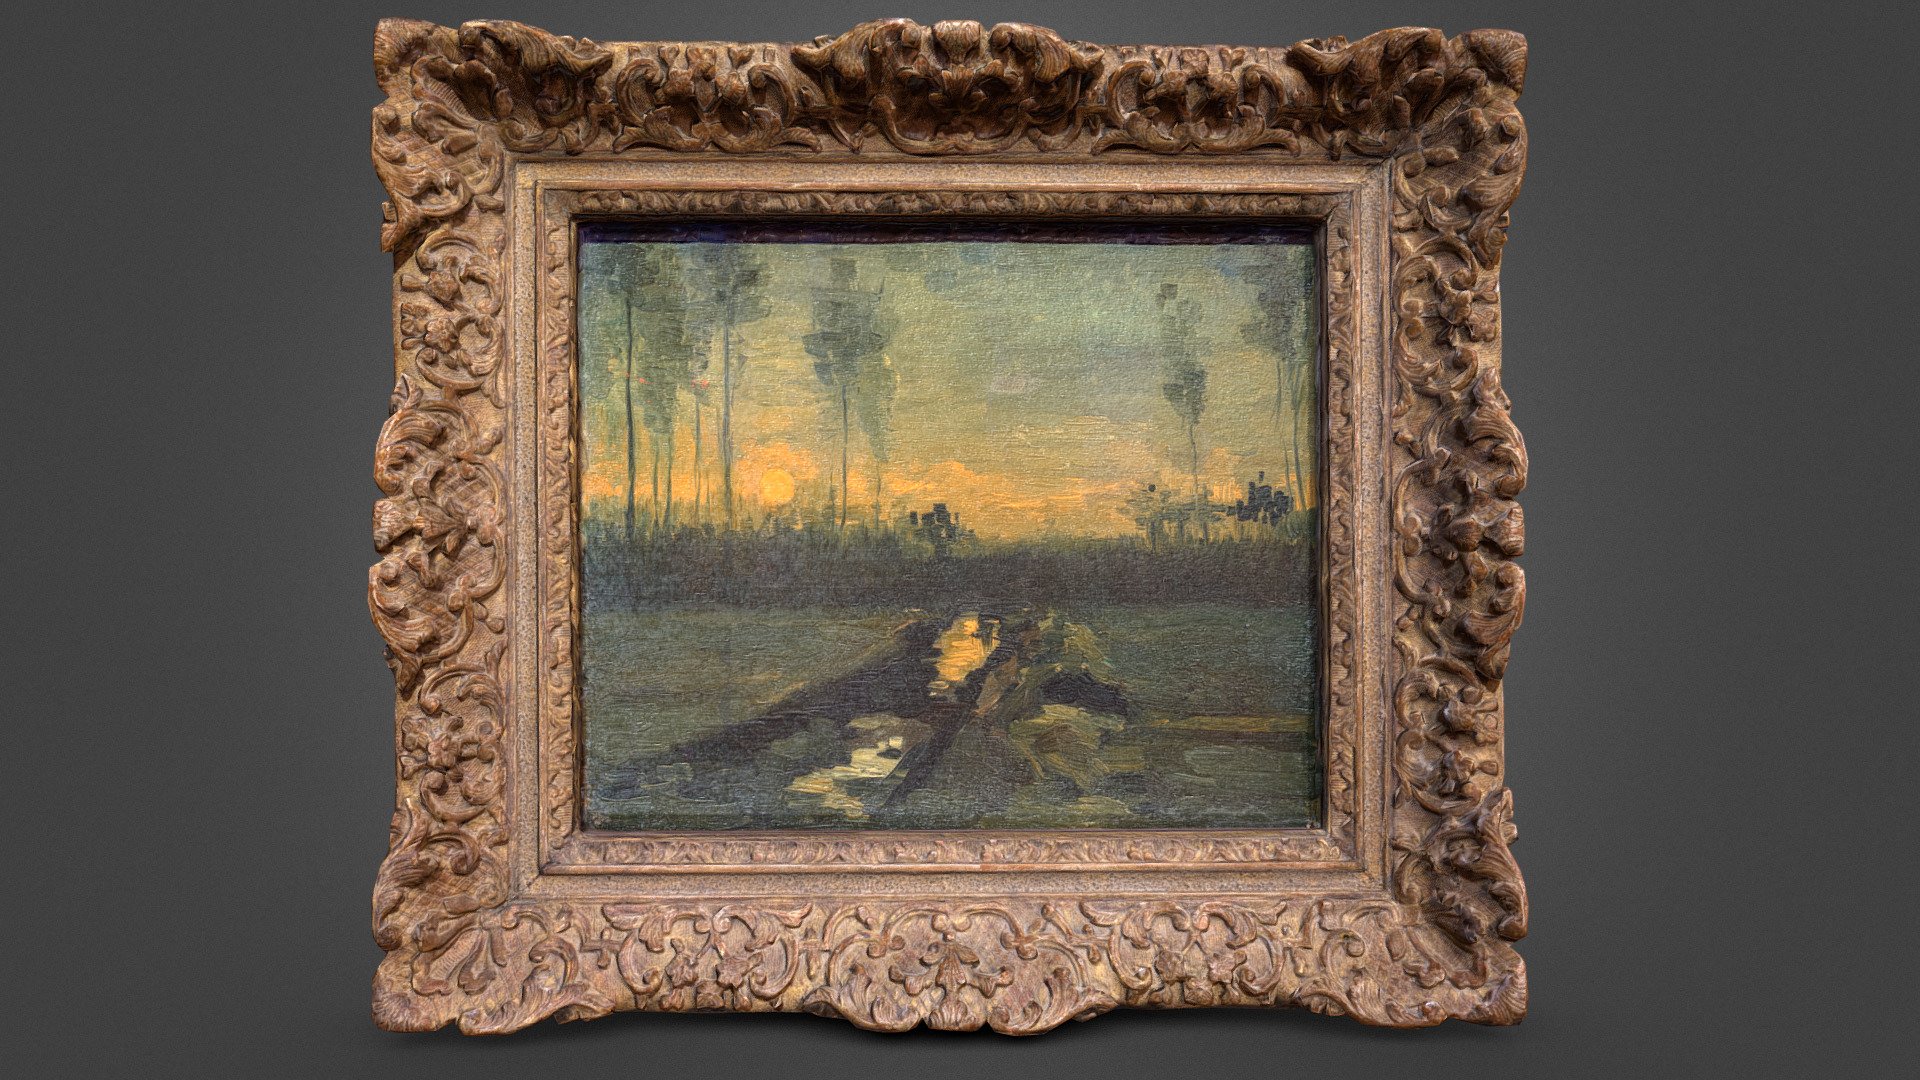 Evening Landscape
1885
Oil on canvas mounted on cardboard. 35 x 43 cm
Museo Nacional Thyssen-Bornemisza, Madrid
Inv. no. 788 (1966.8) - Vincent van Gogh - Evening Landscape - 3D model by Morty 3d model